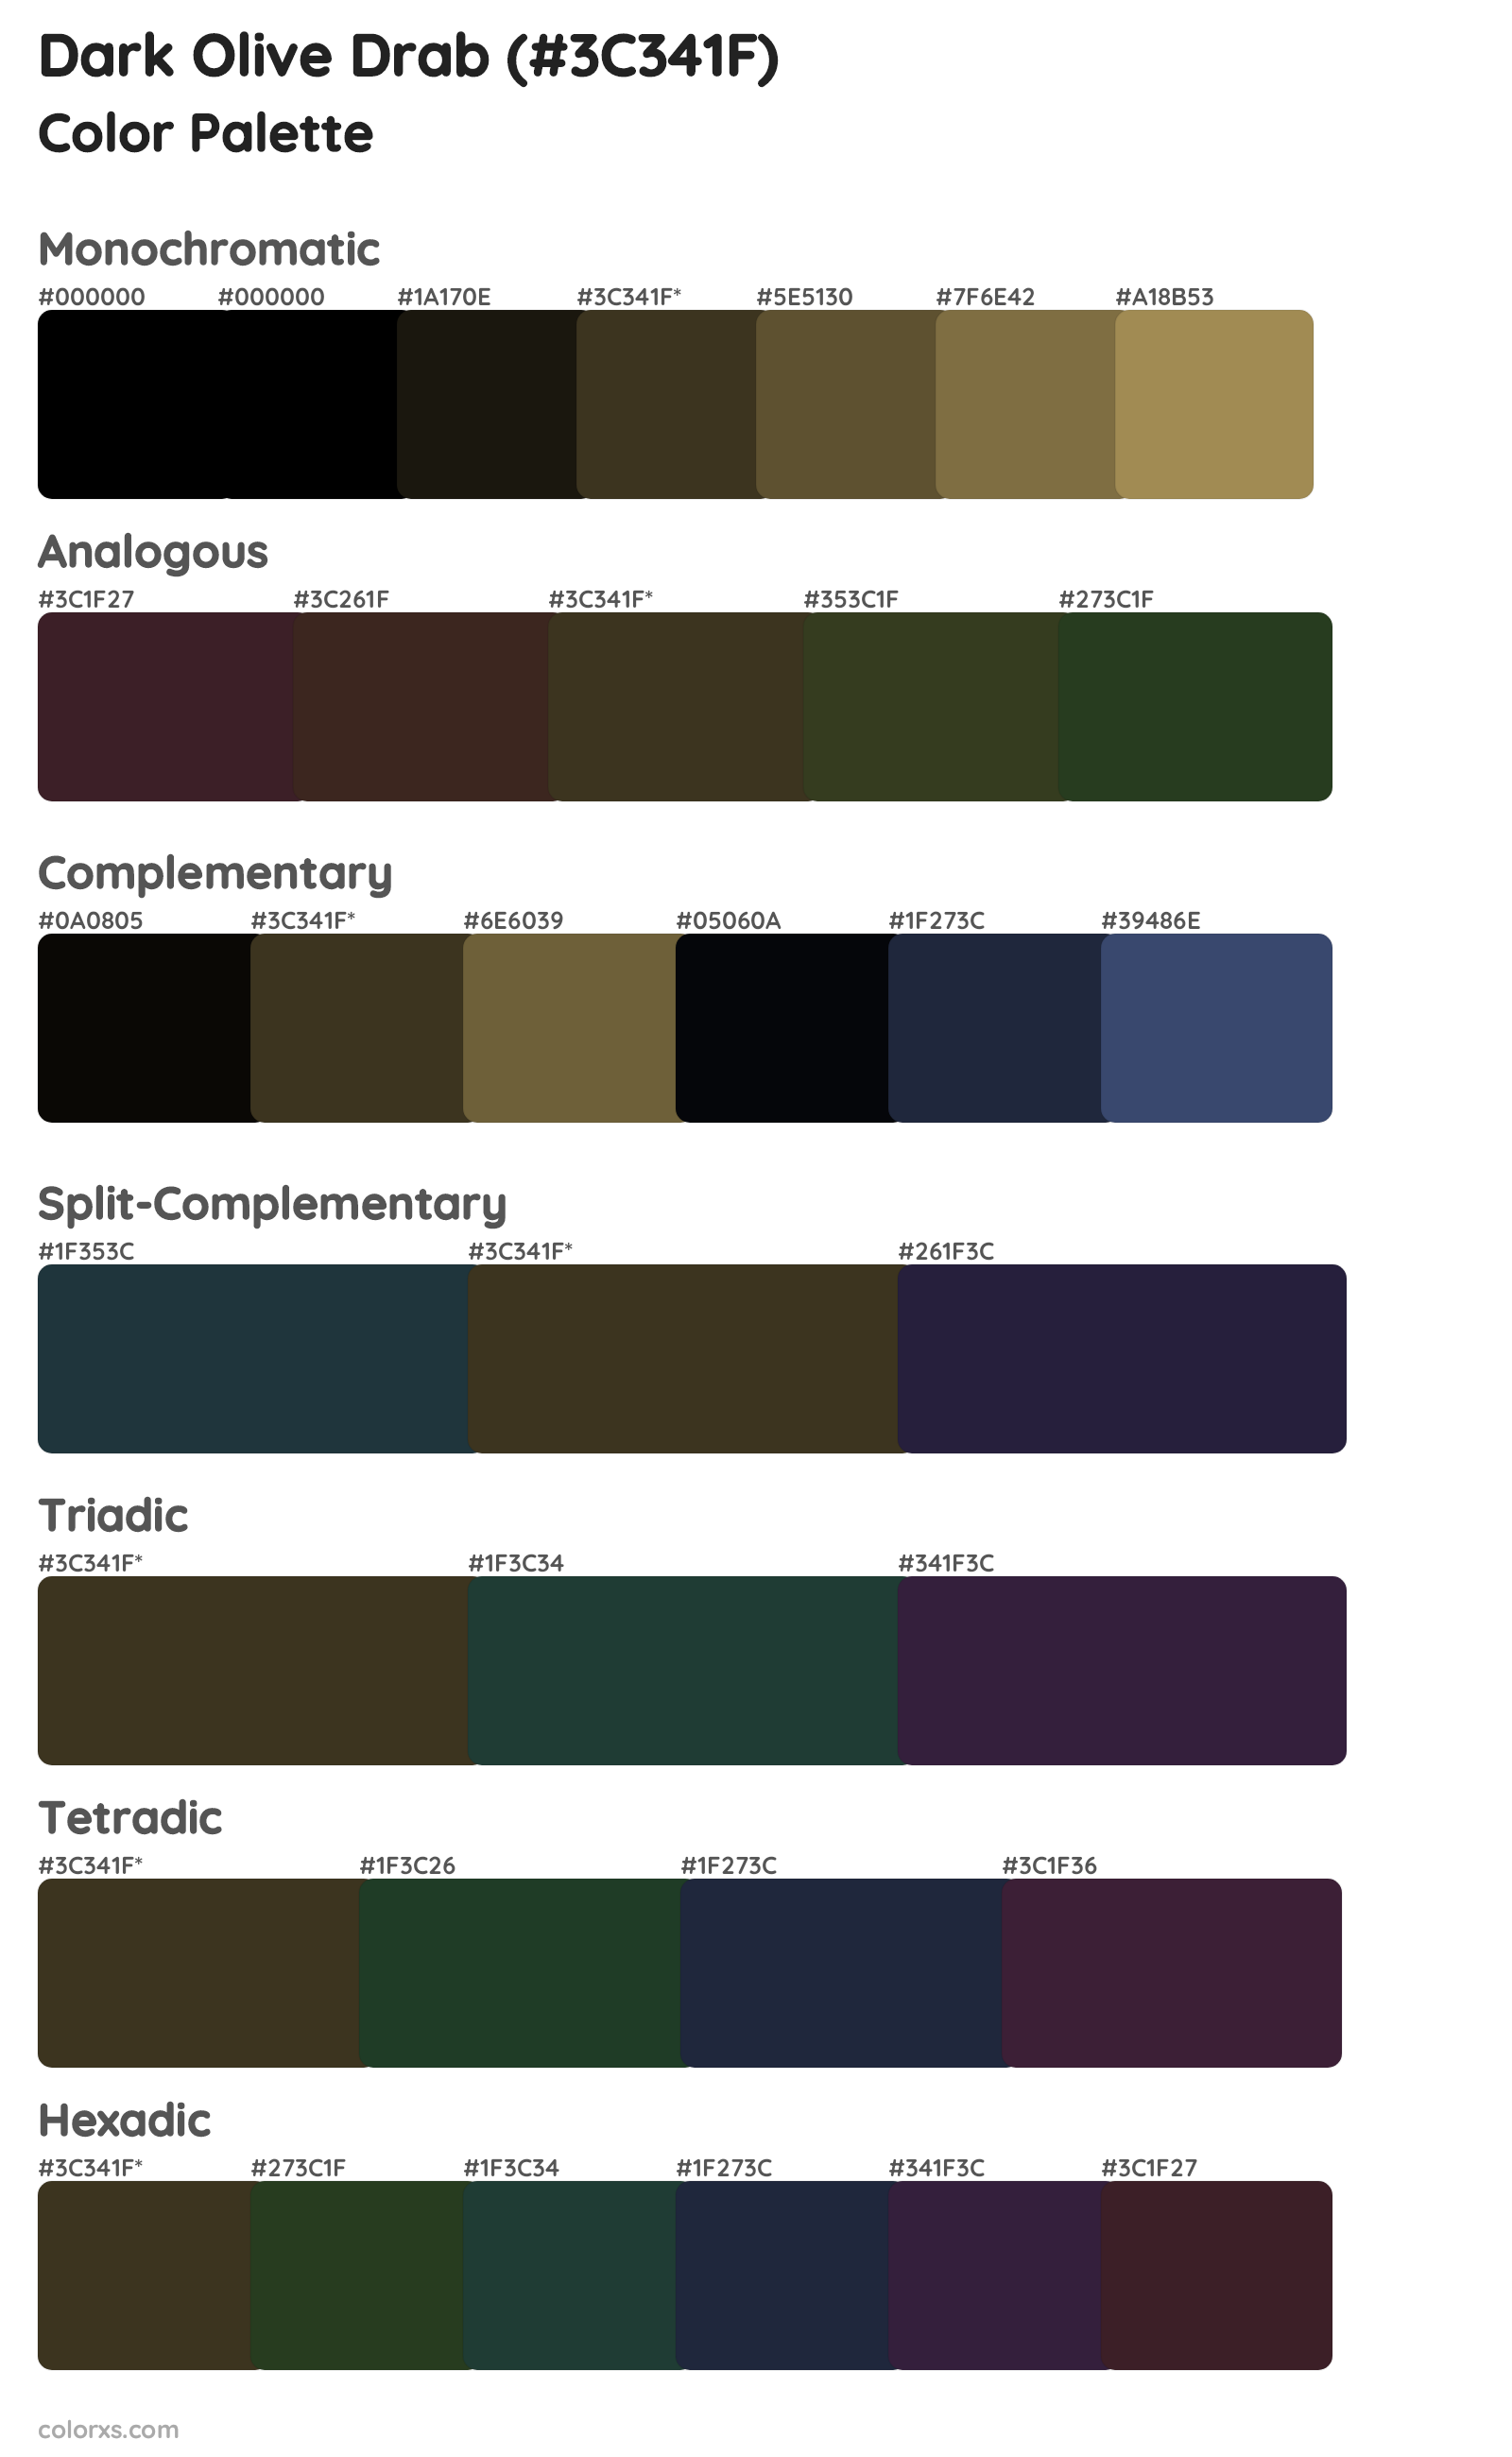 Dark Olive Drab Color Scheme Palettes